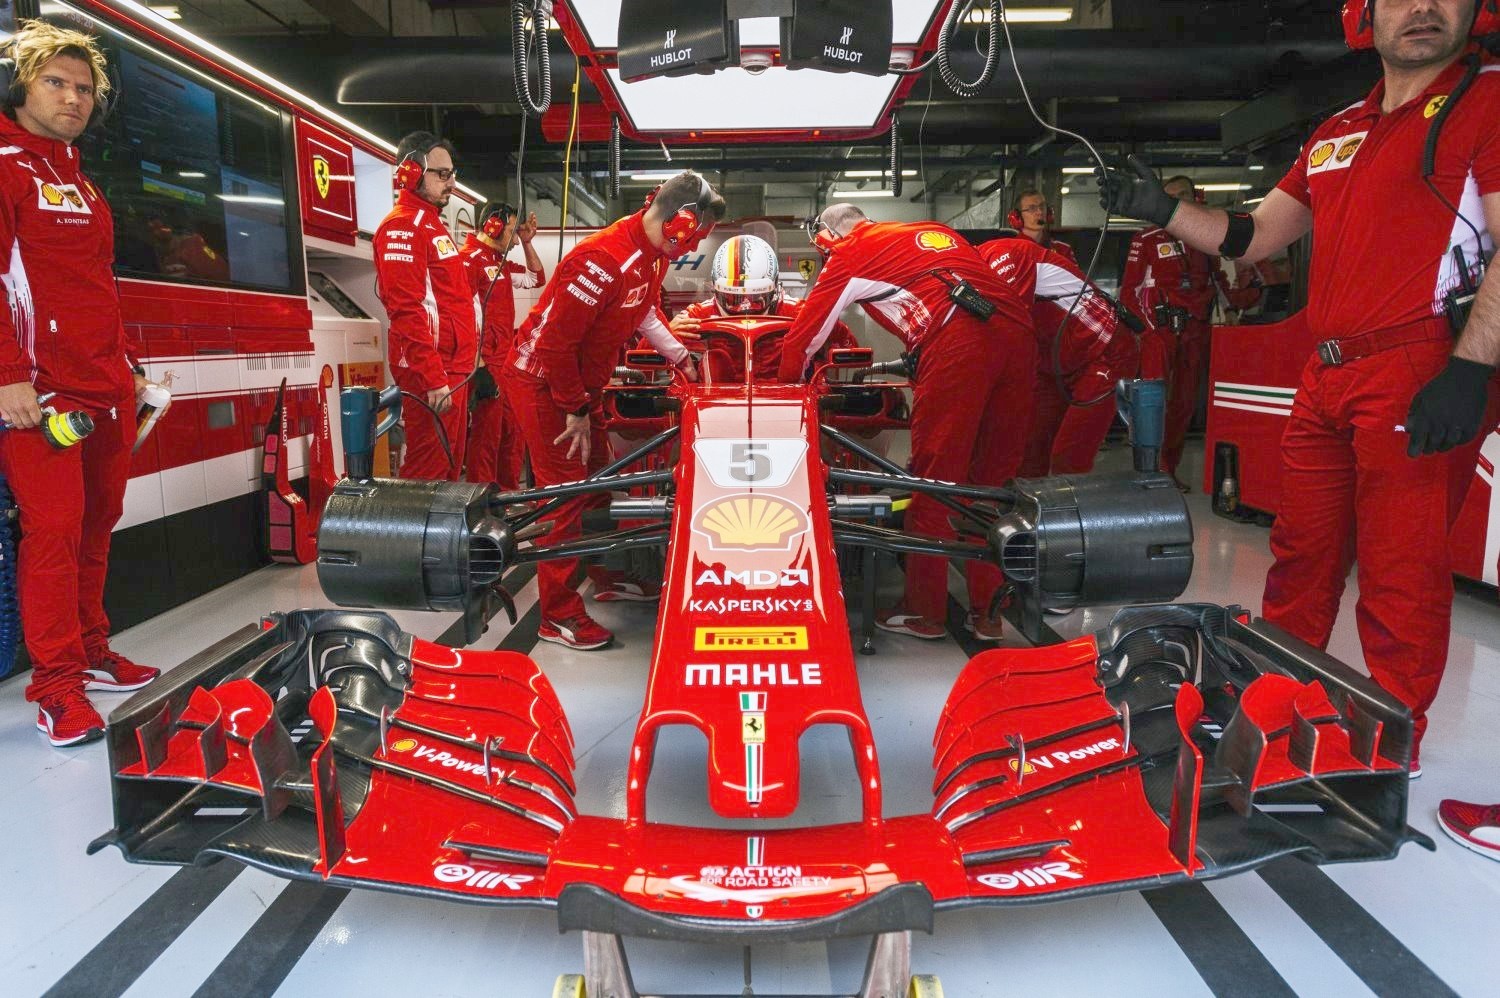 The Ferrari smokes when started